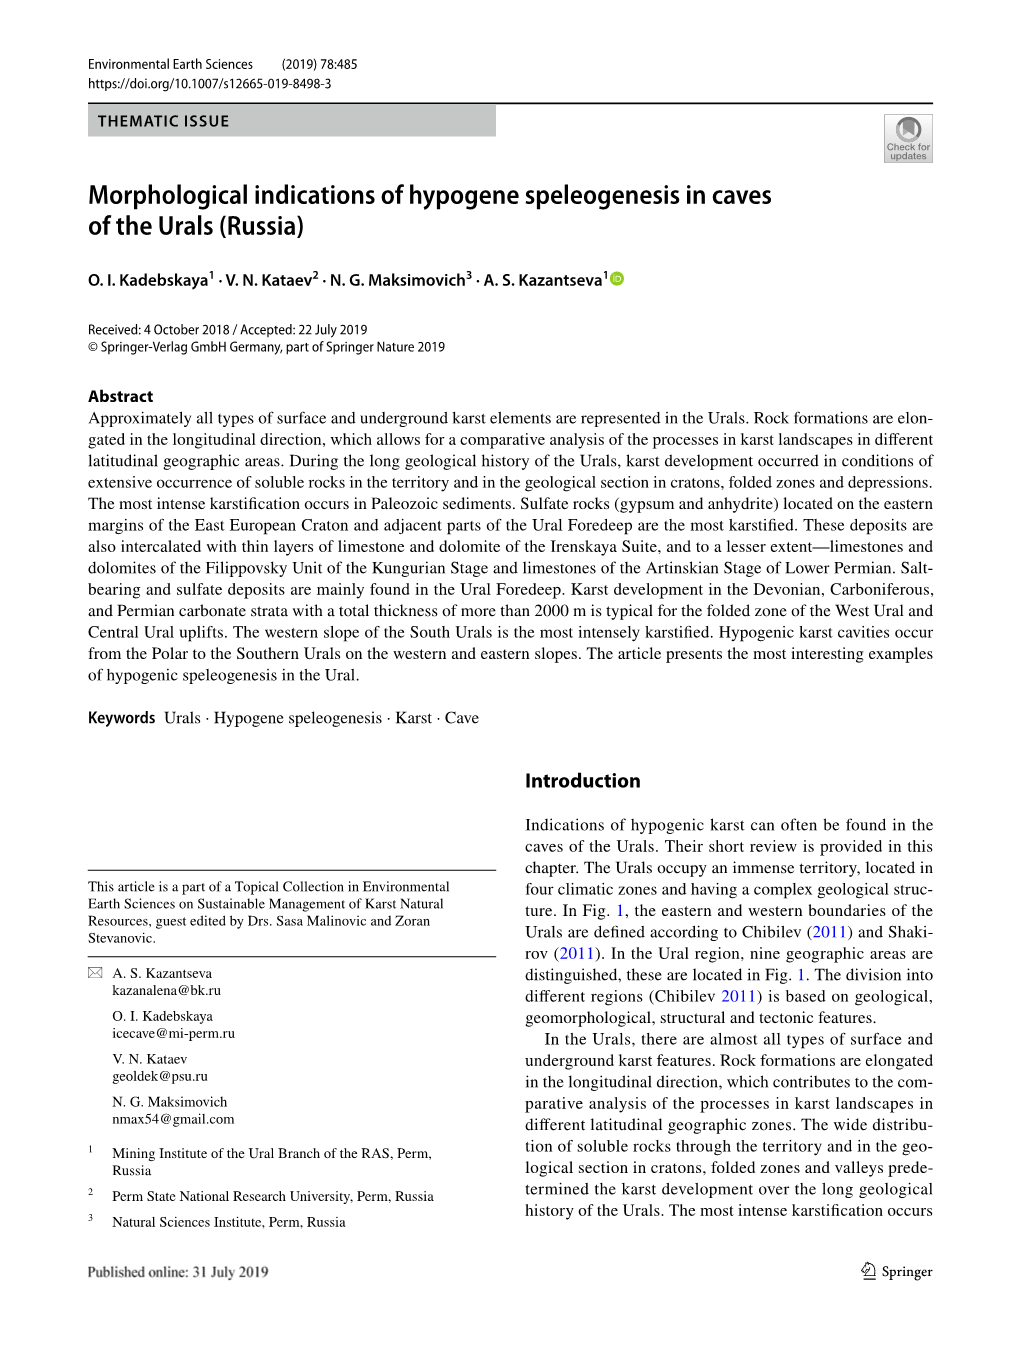 Morphological Indications of Hypogene Speleogenesis in Caves of the Urals (Russia)